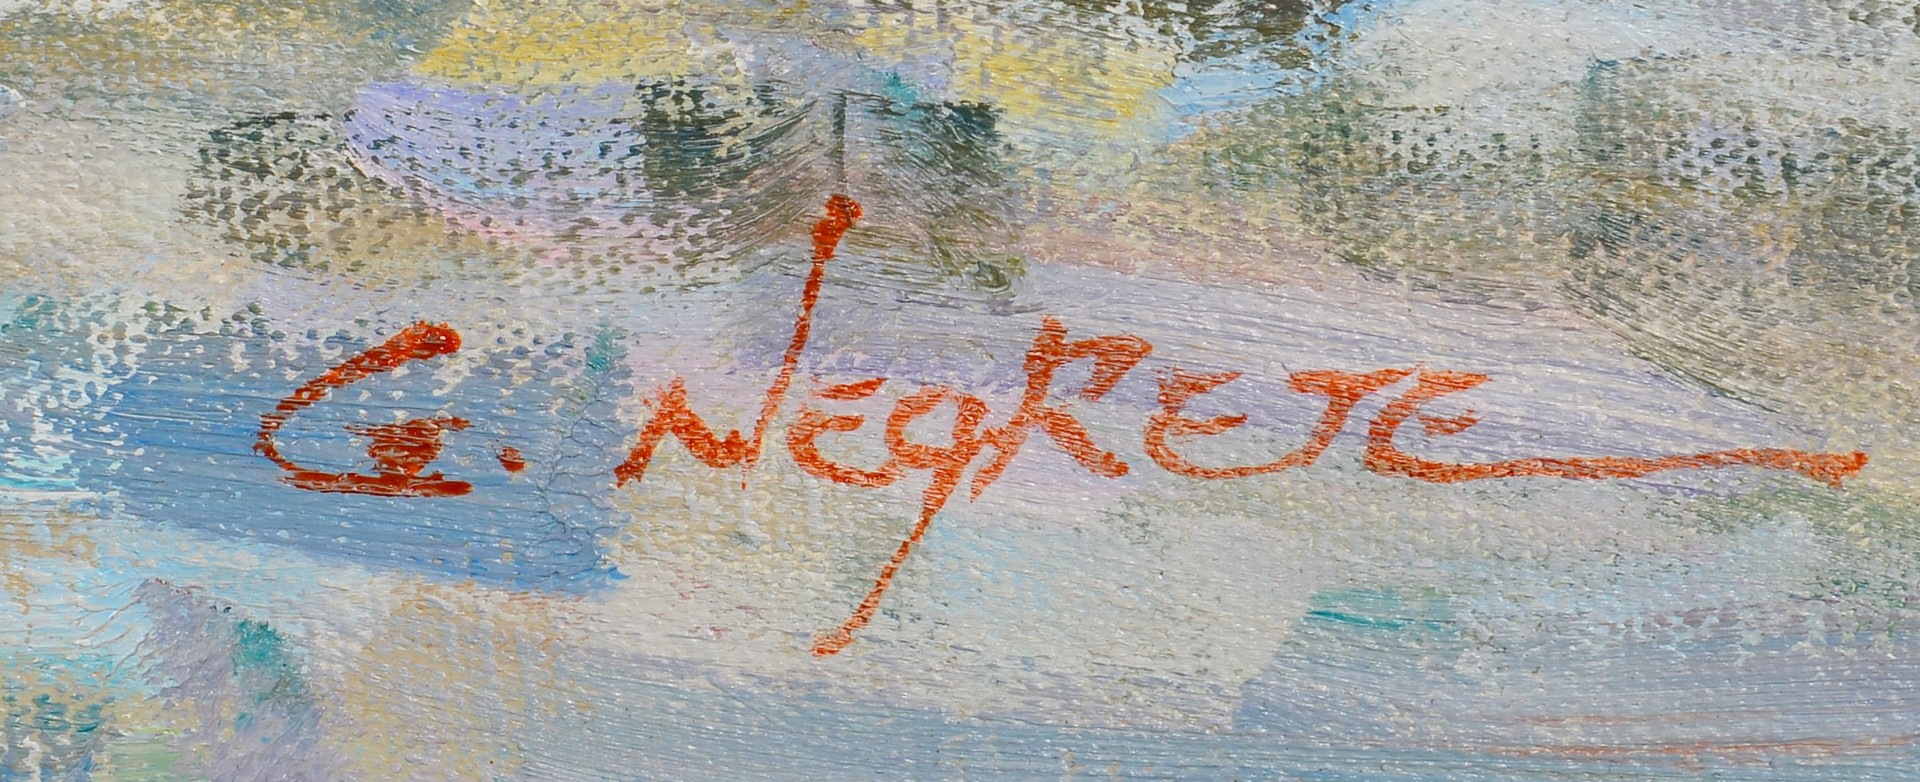 Lot 825: Impressionist Oil on Canvas, Negrete